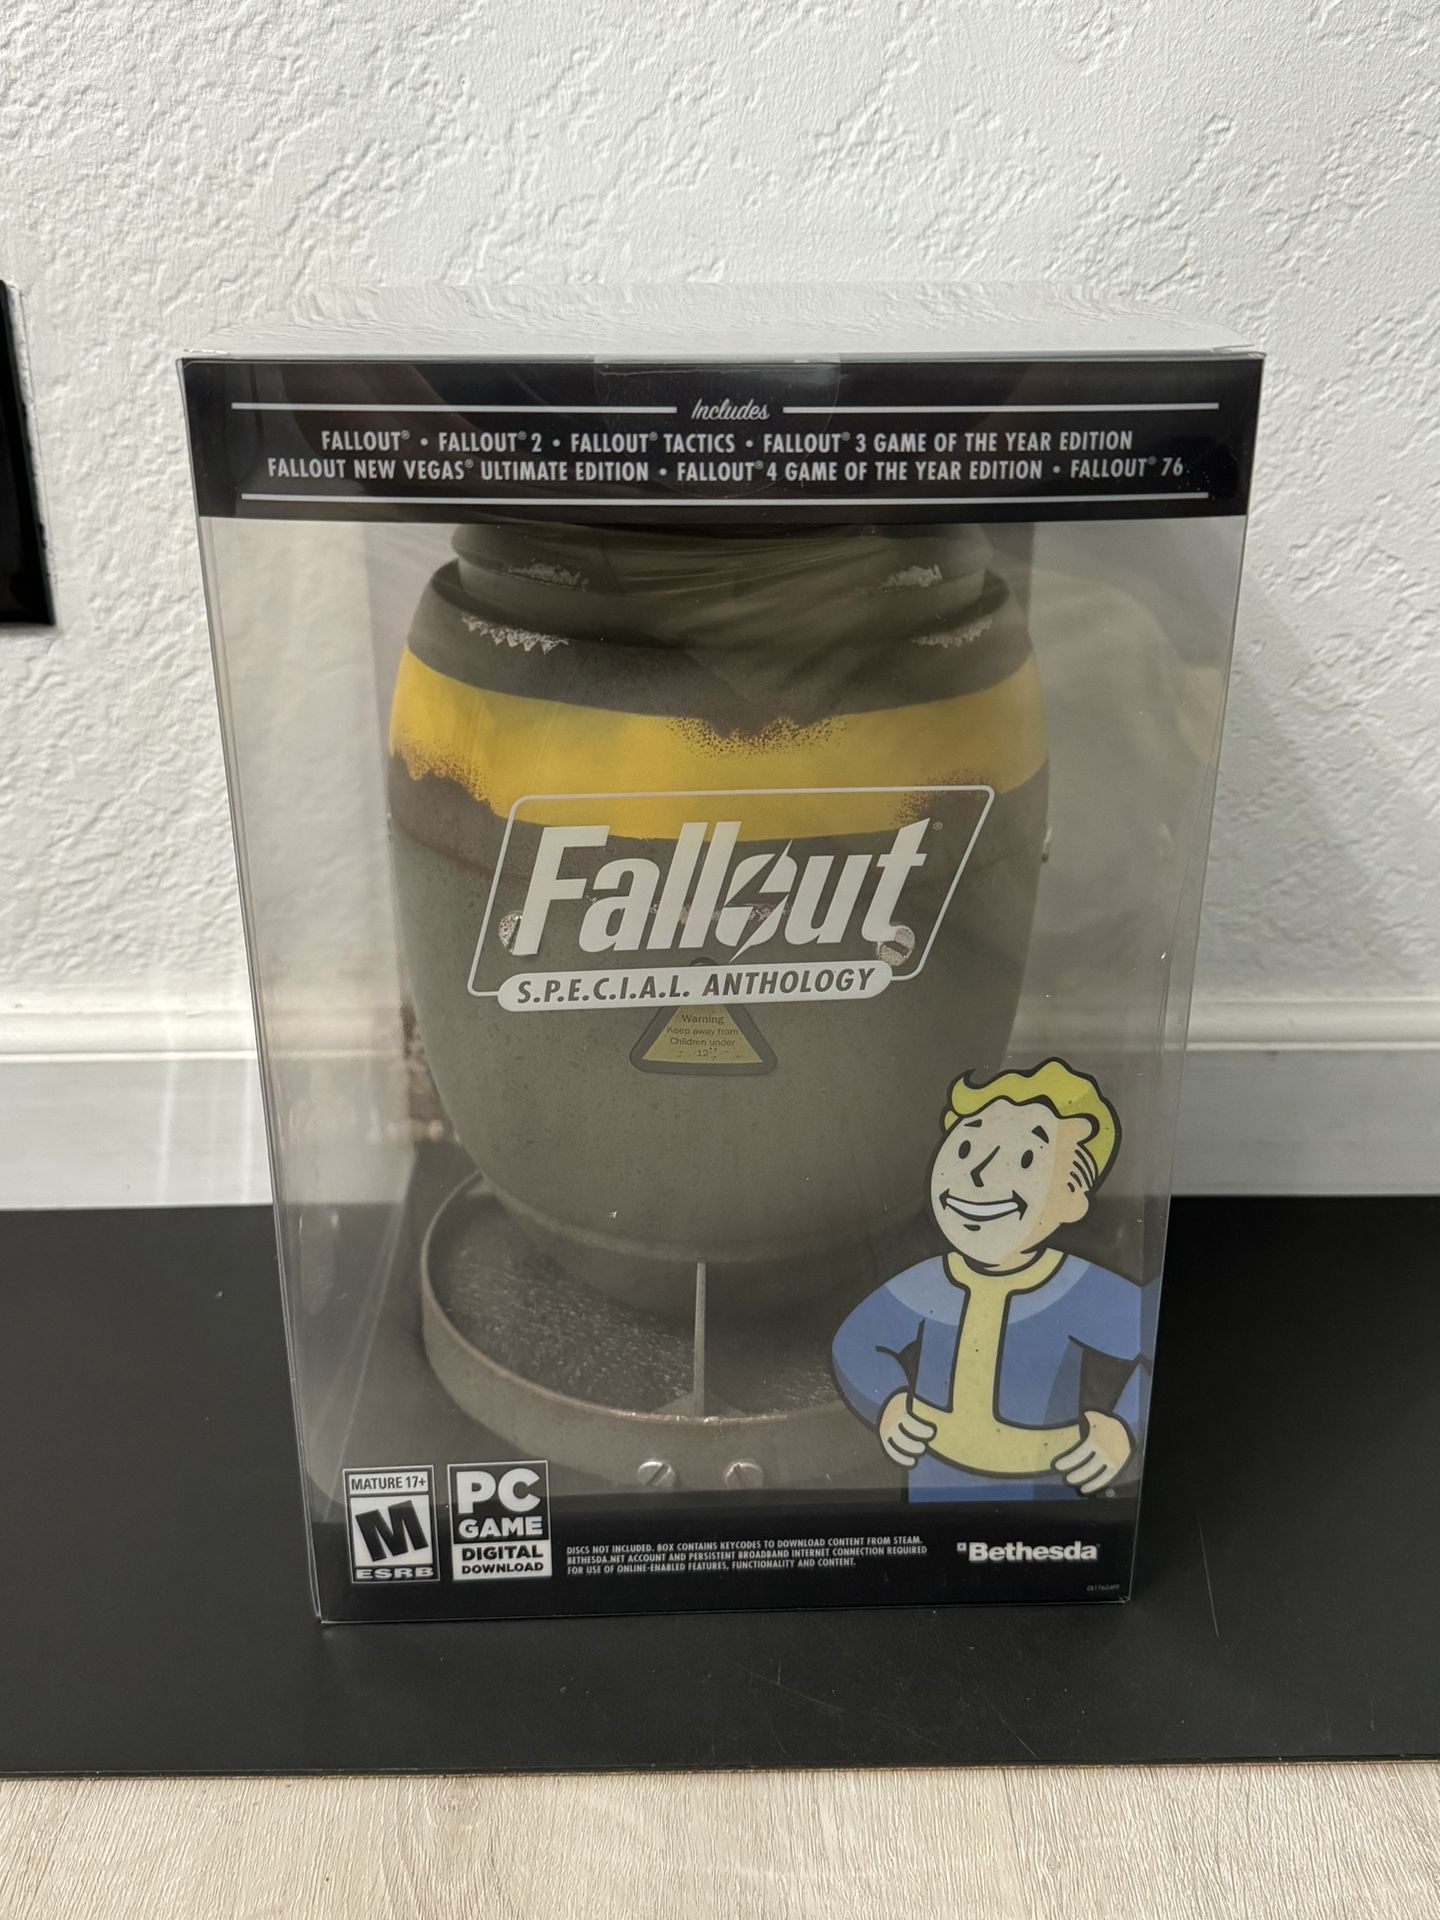 Bethesda Fallout S.P.E.C.I.A.L. Anthology Edition PC [New][Sealed]